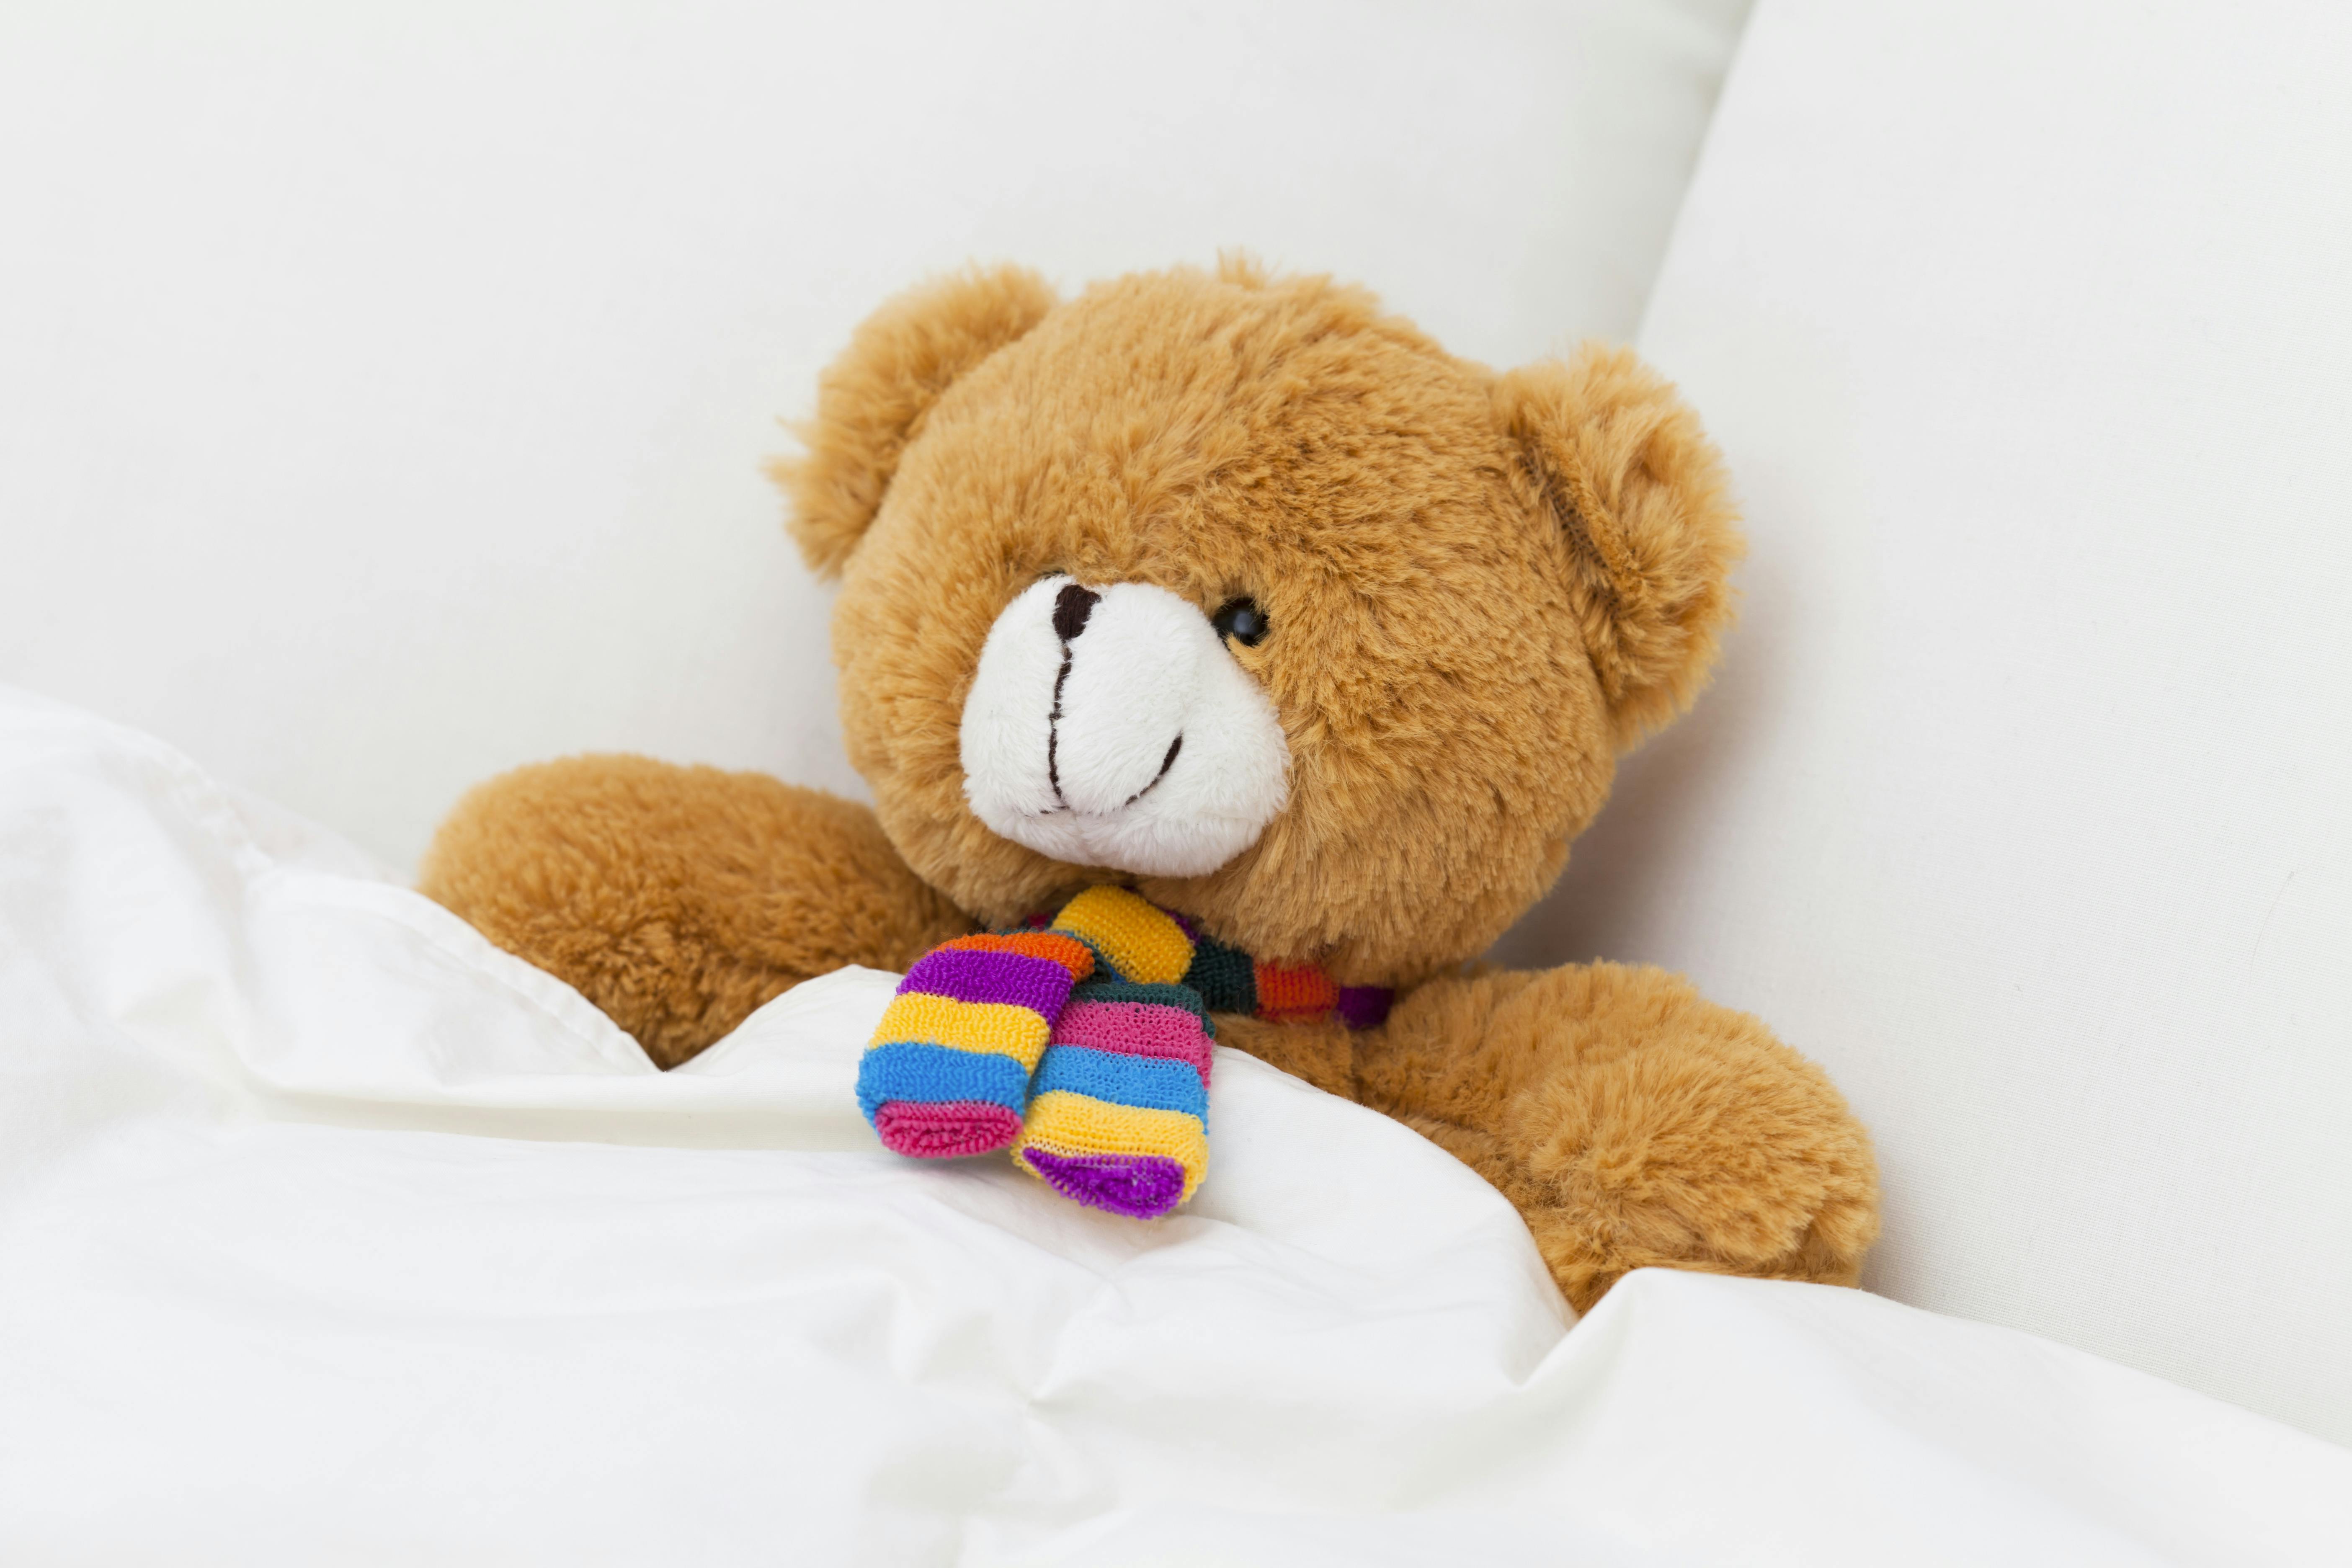 Teddy bear sleeping in a bed